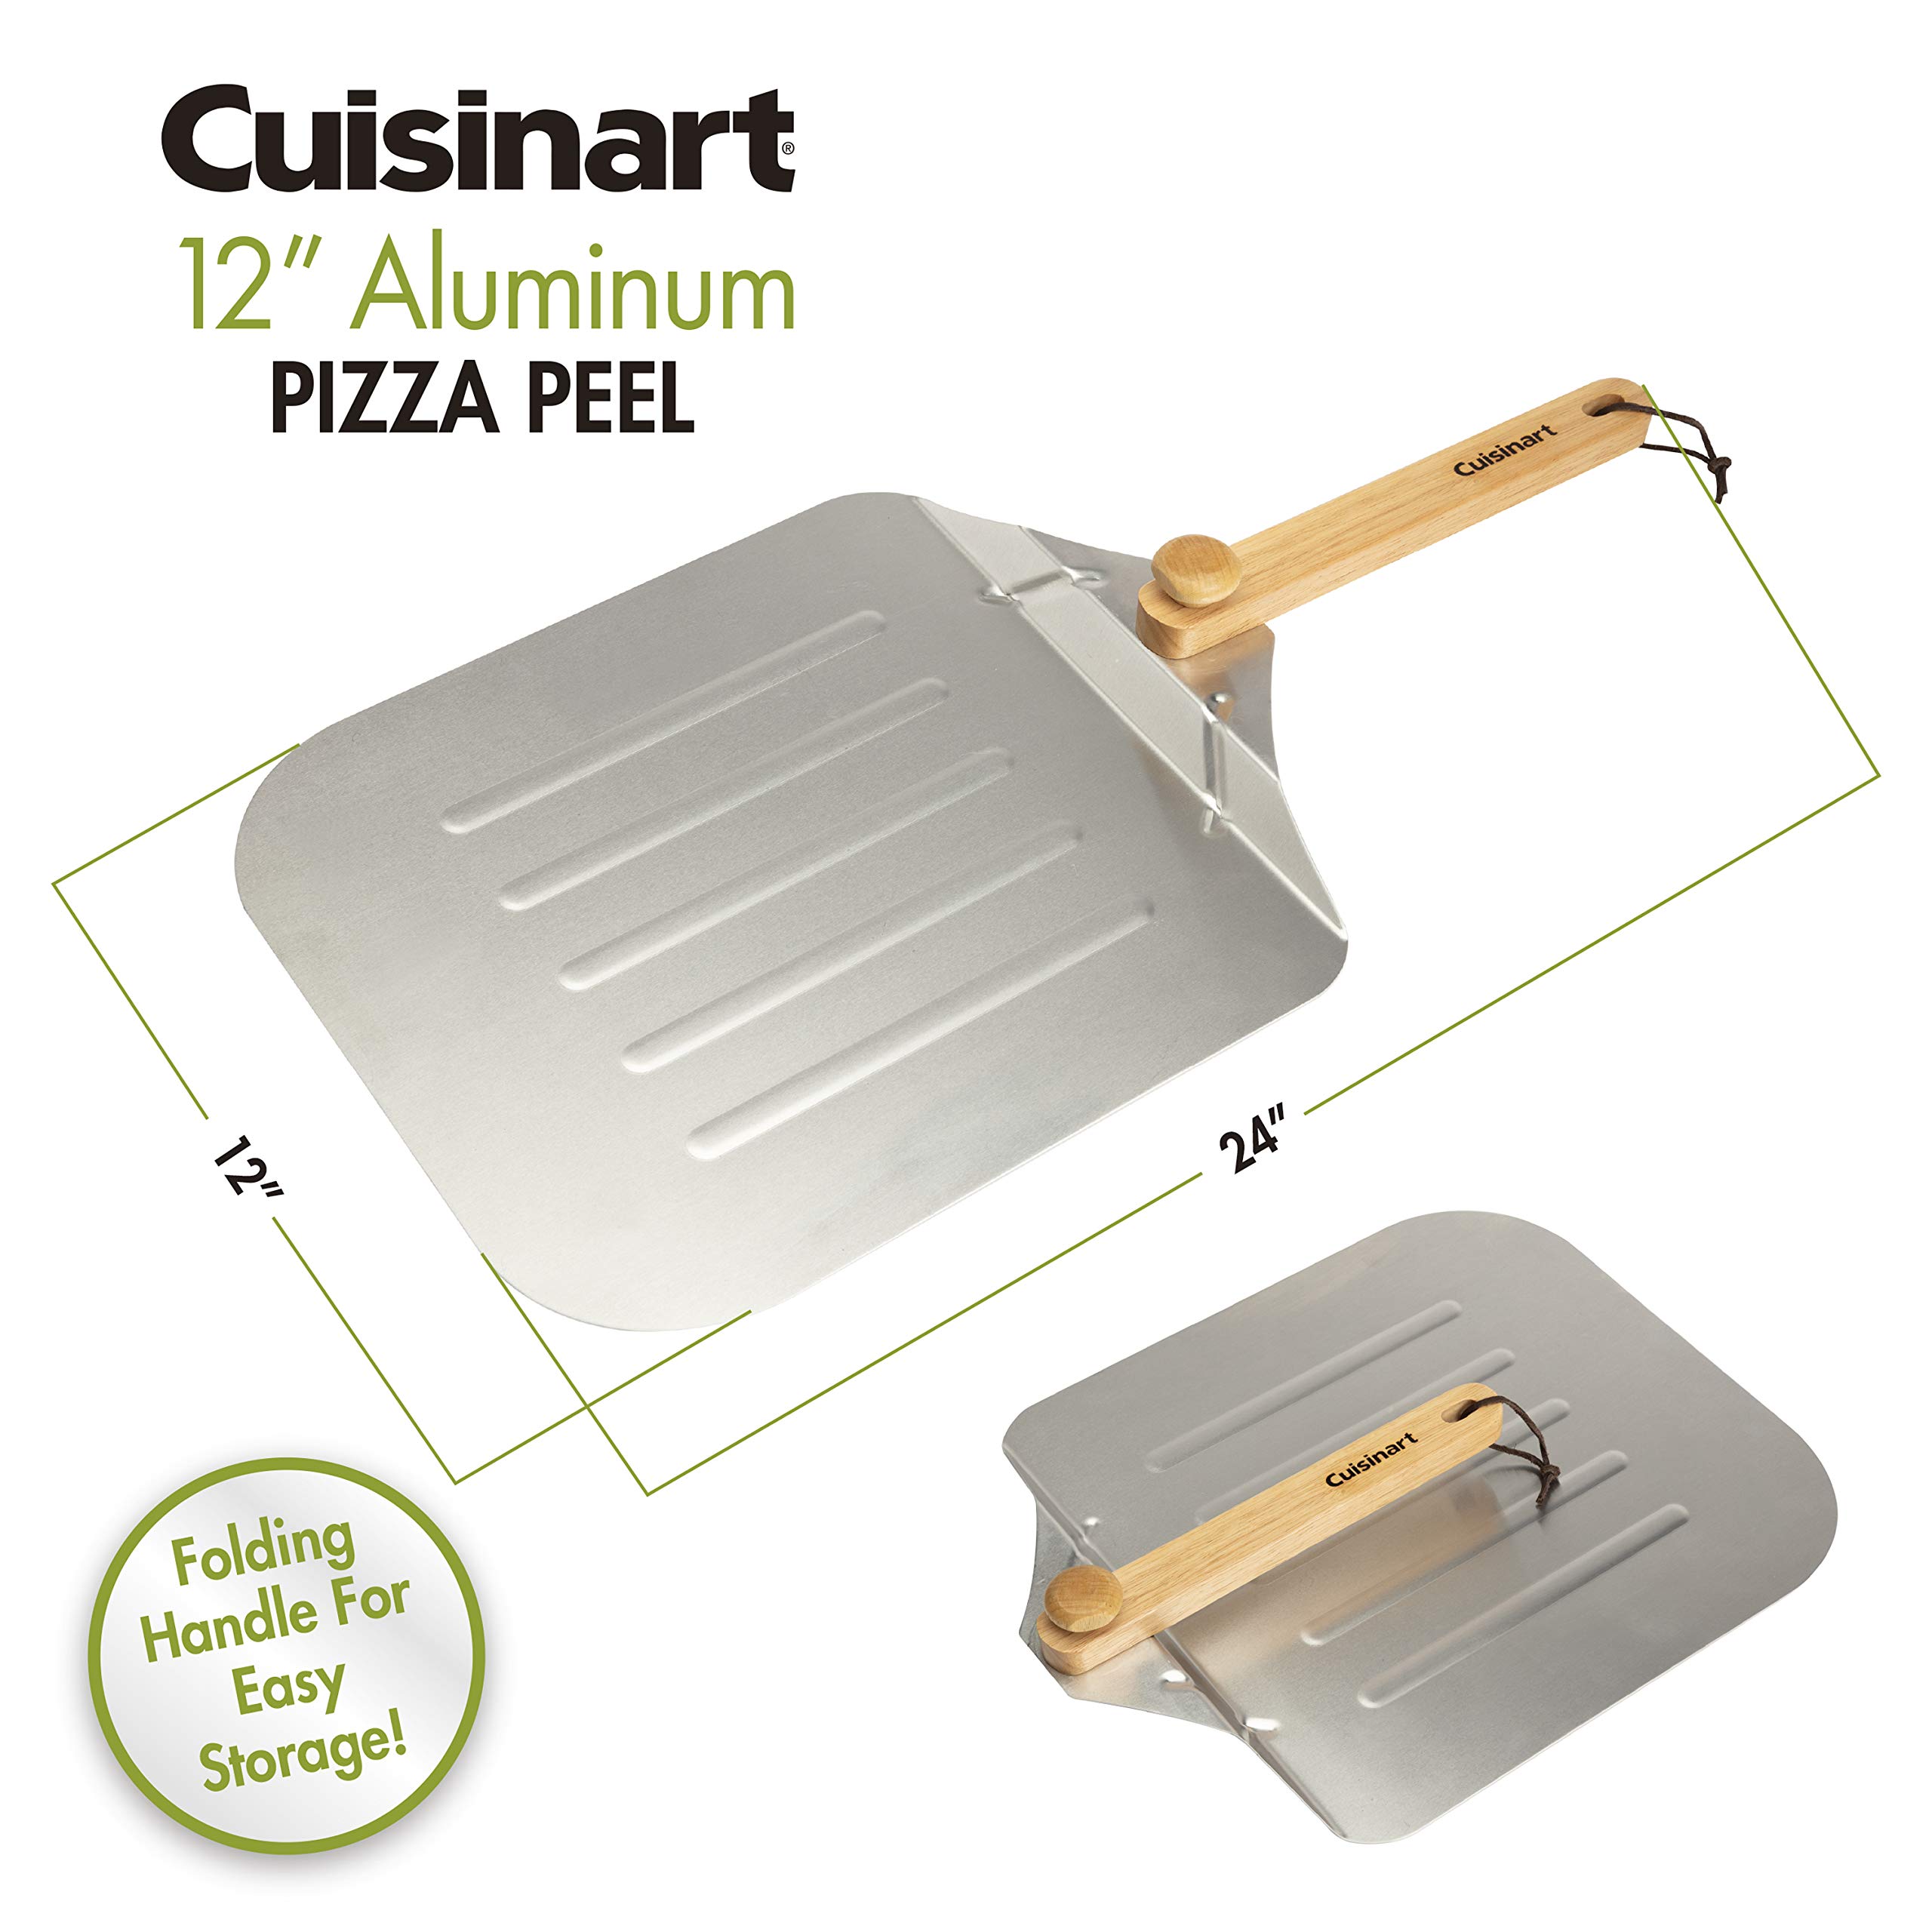 12" Cuisinart Aluminum Pizza Peel w/ Folding Wood Handle $13.80 + Free Shipping w/ Prime or on $35+